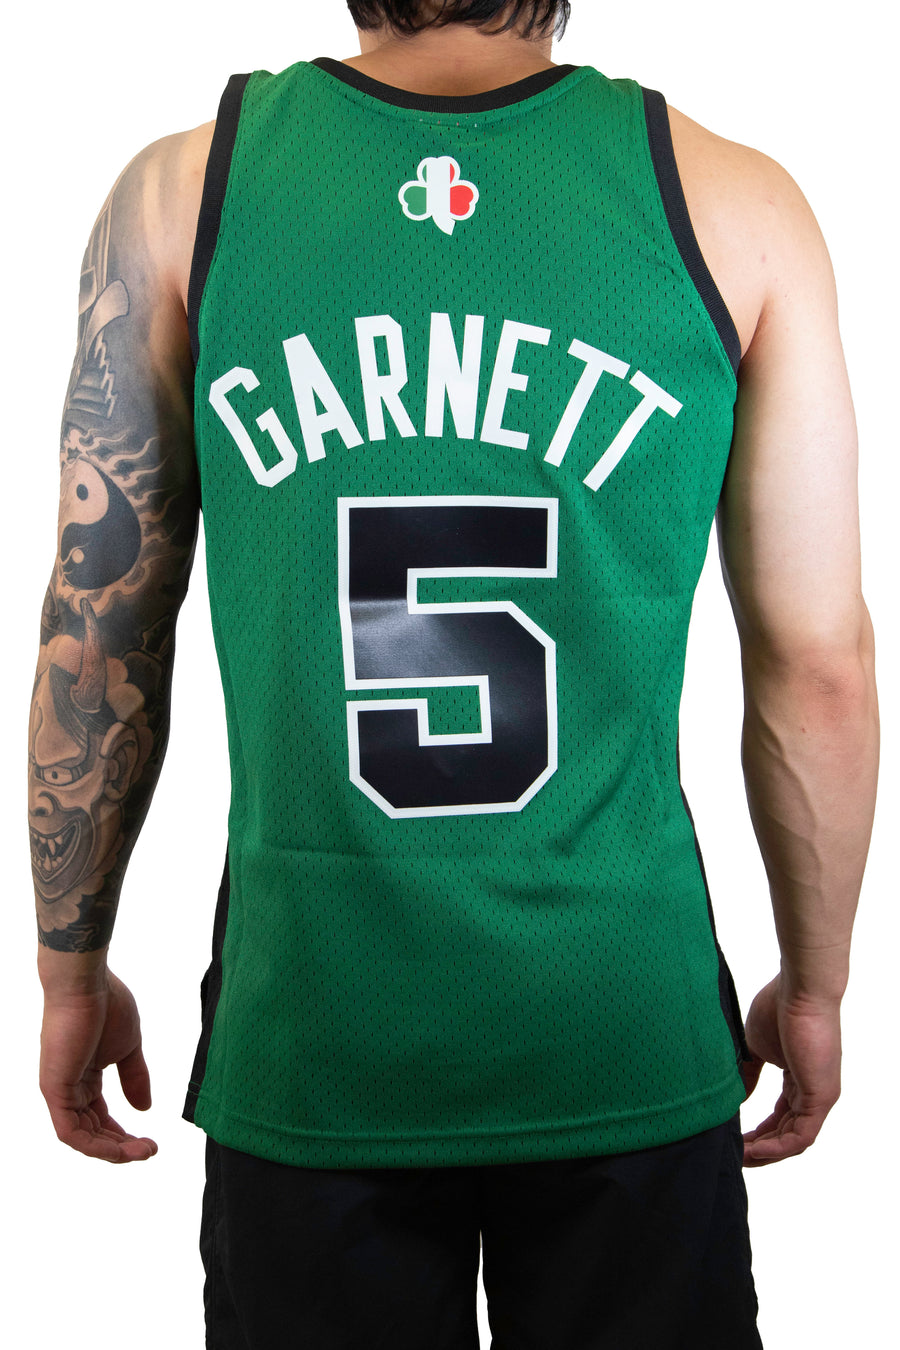 Mitchell & Ness: Hardwood Classic Boston Celtics Jersey (Kevin Garnett)